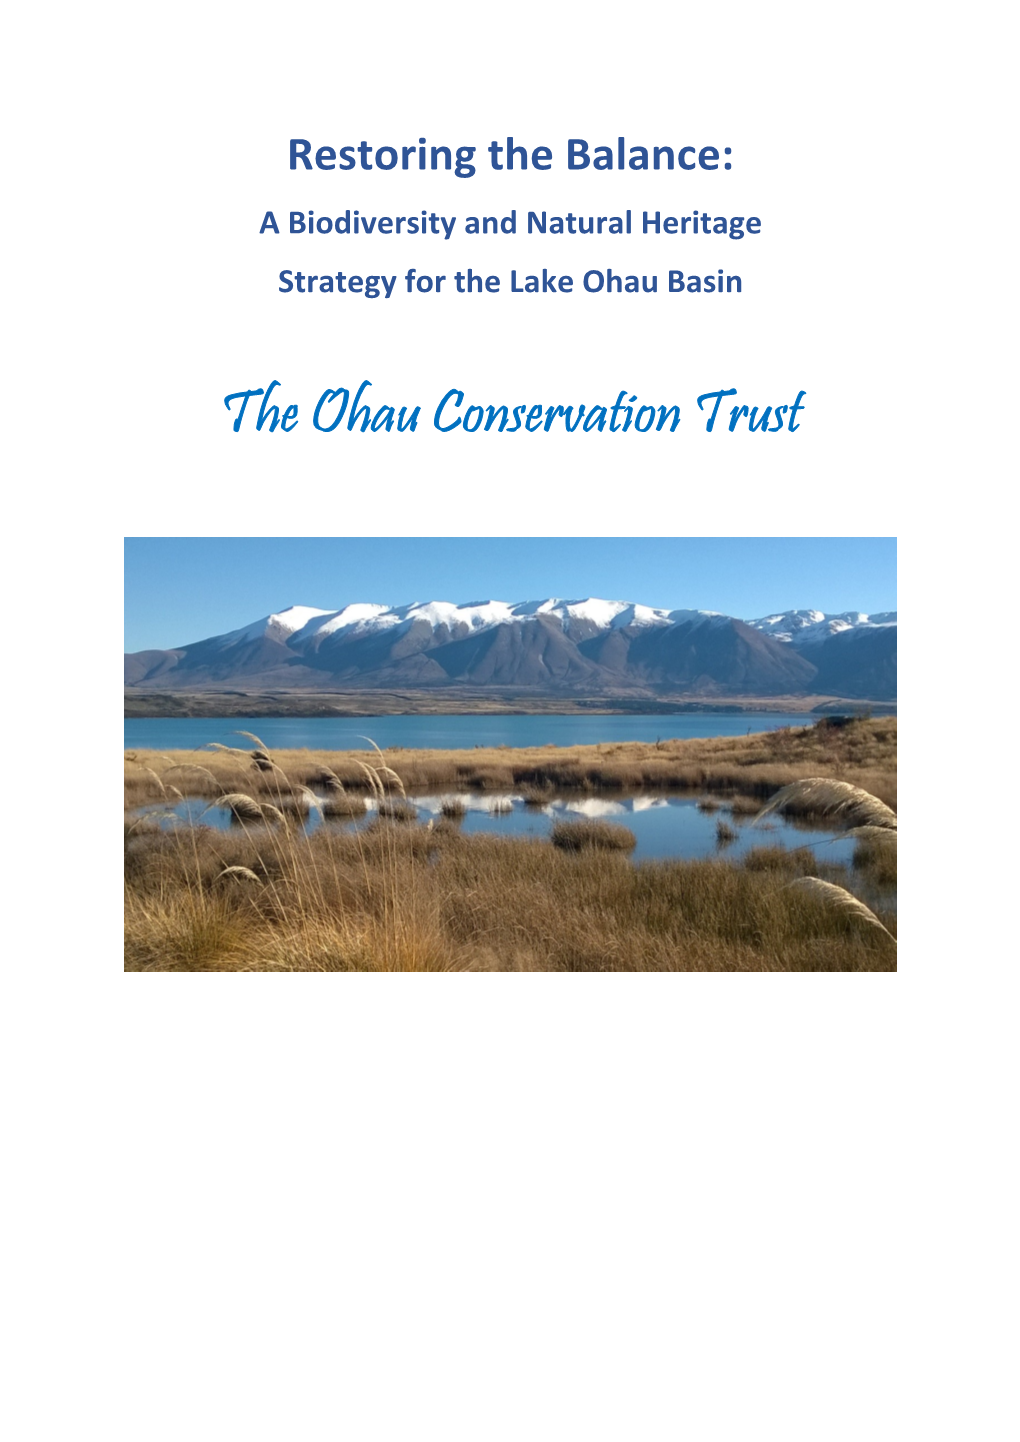 Strategic Plan 2 Contents Part A: the Ohau Conservation Trust